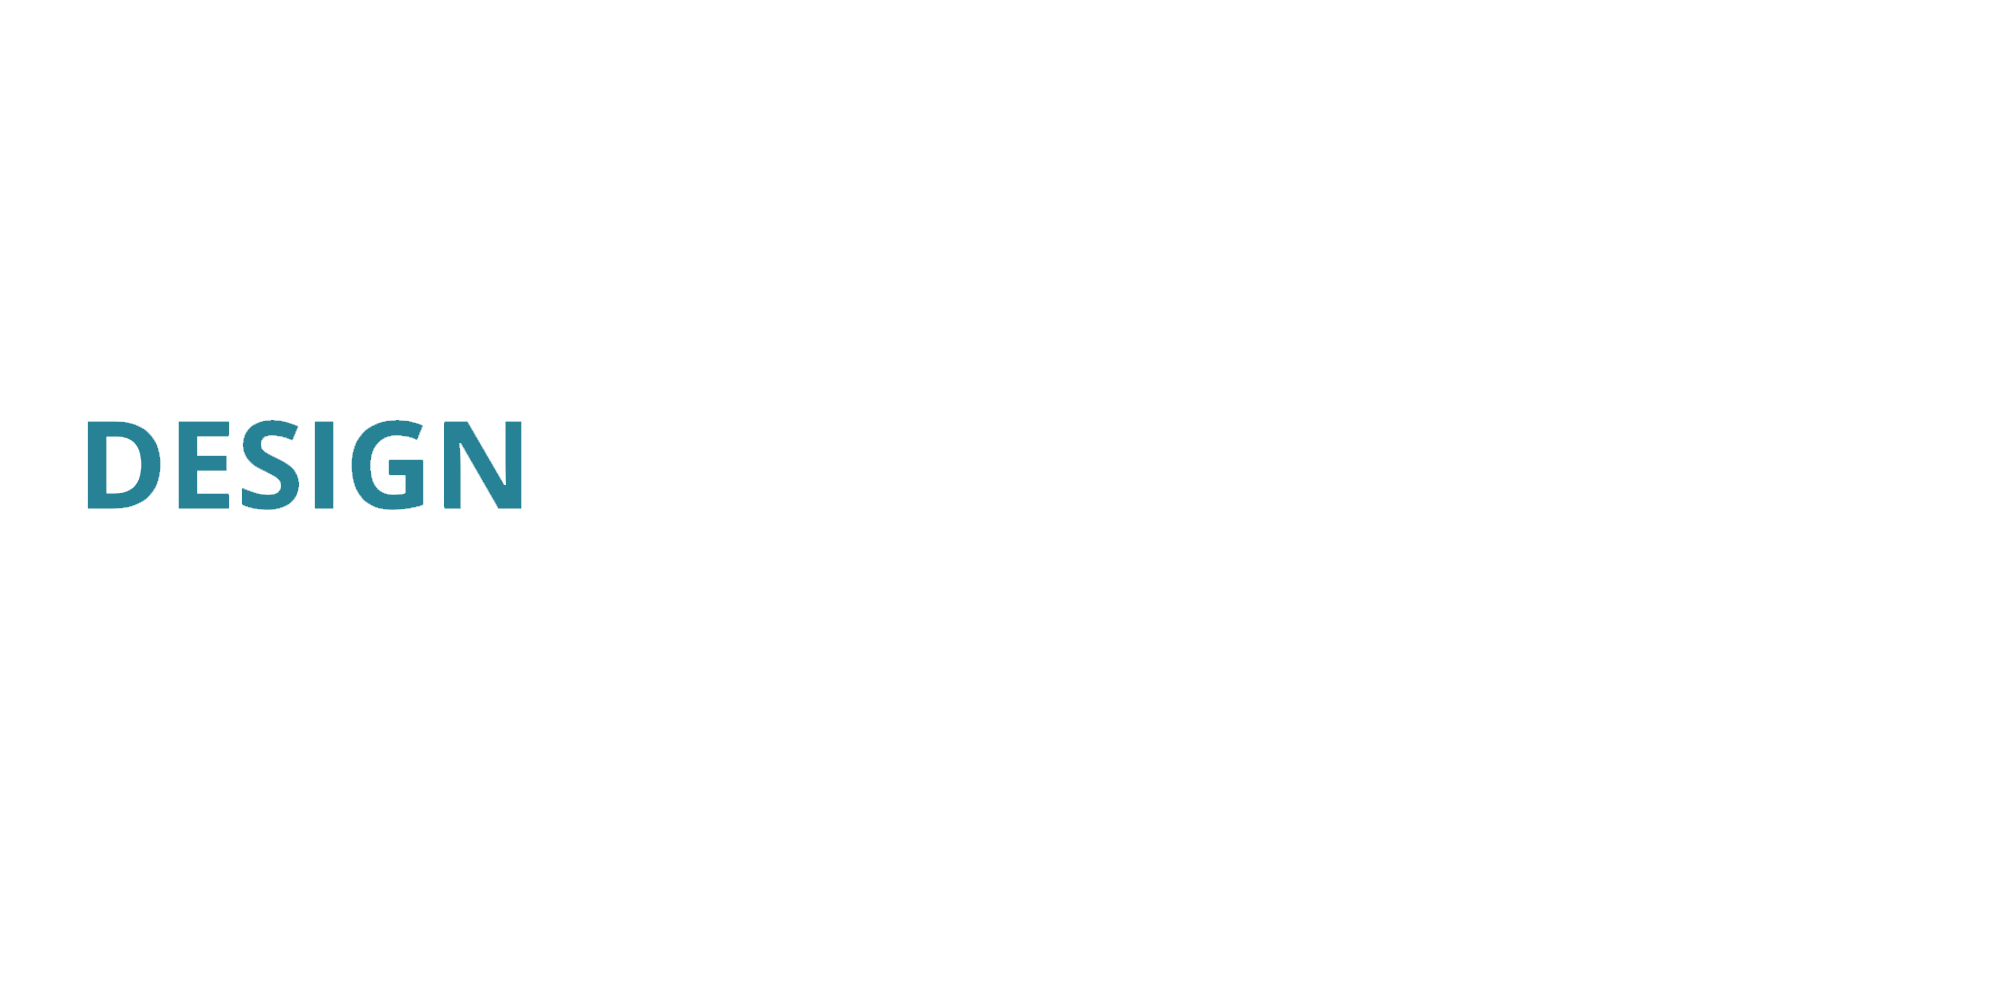 David LE GOER - We Design Your Sound